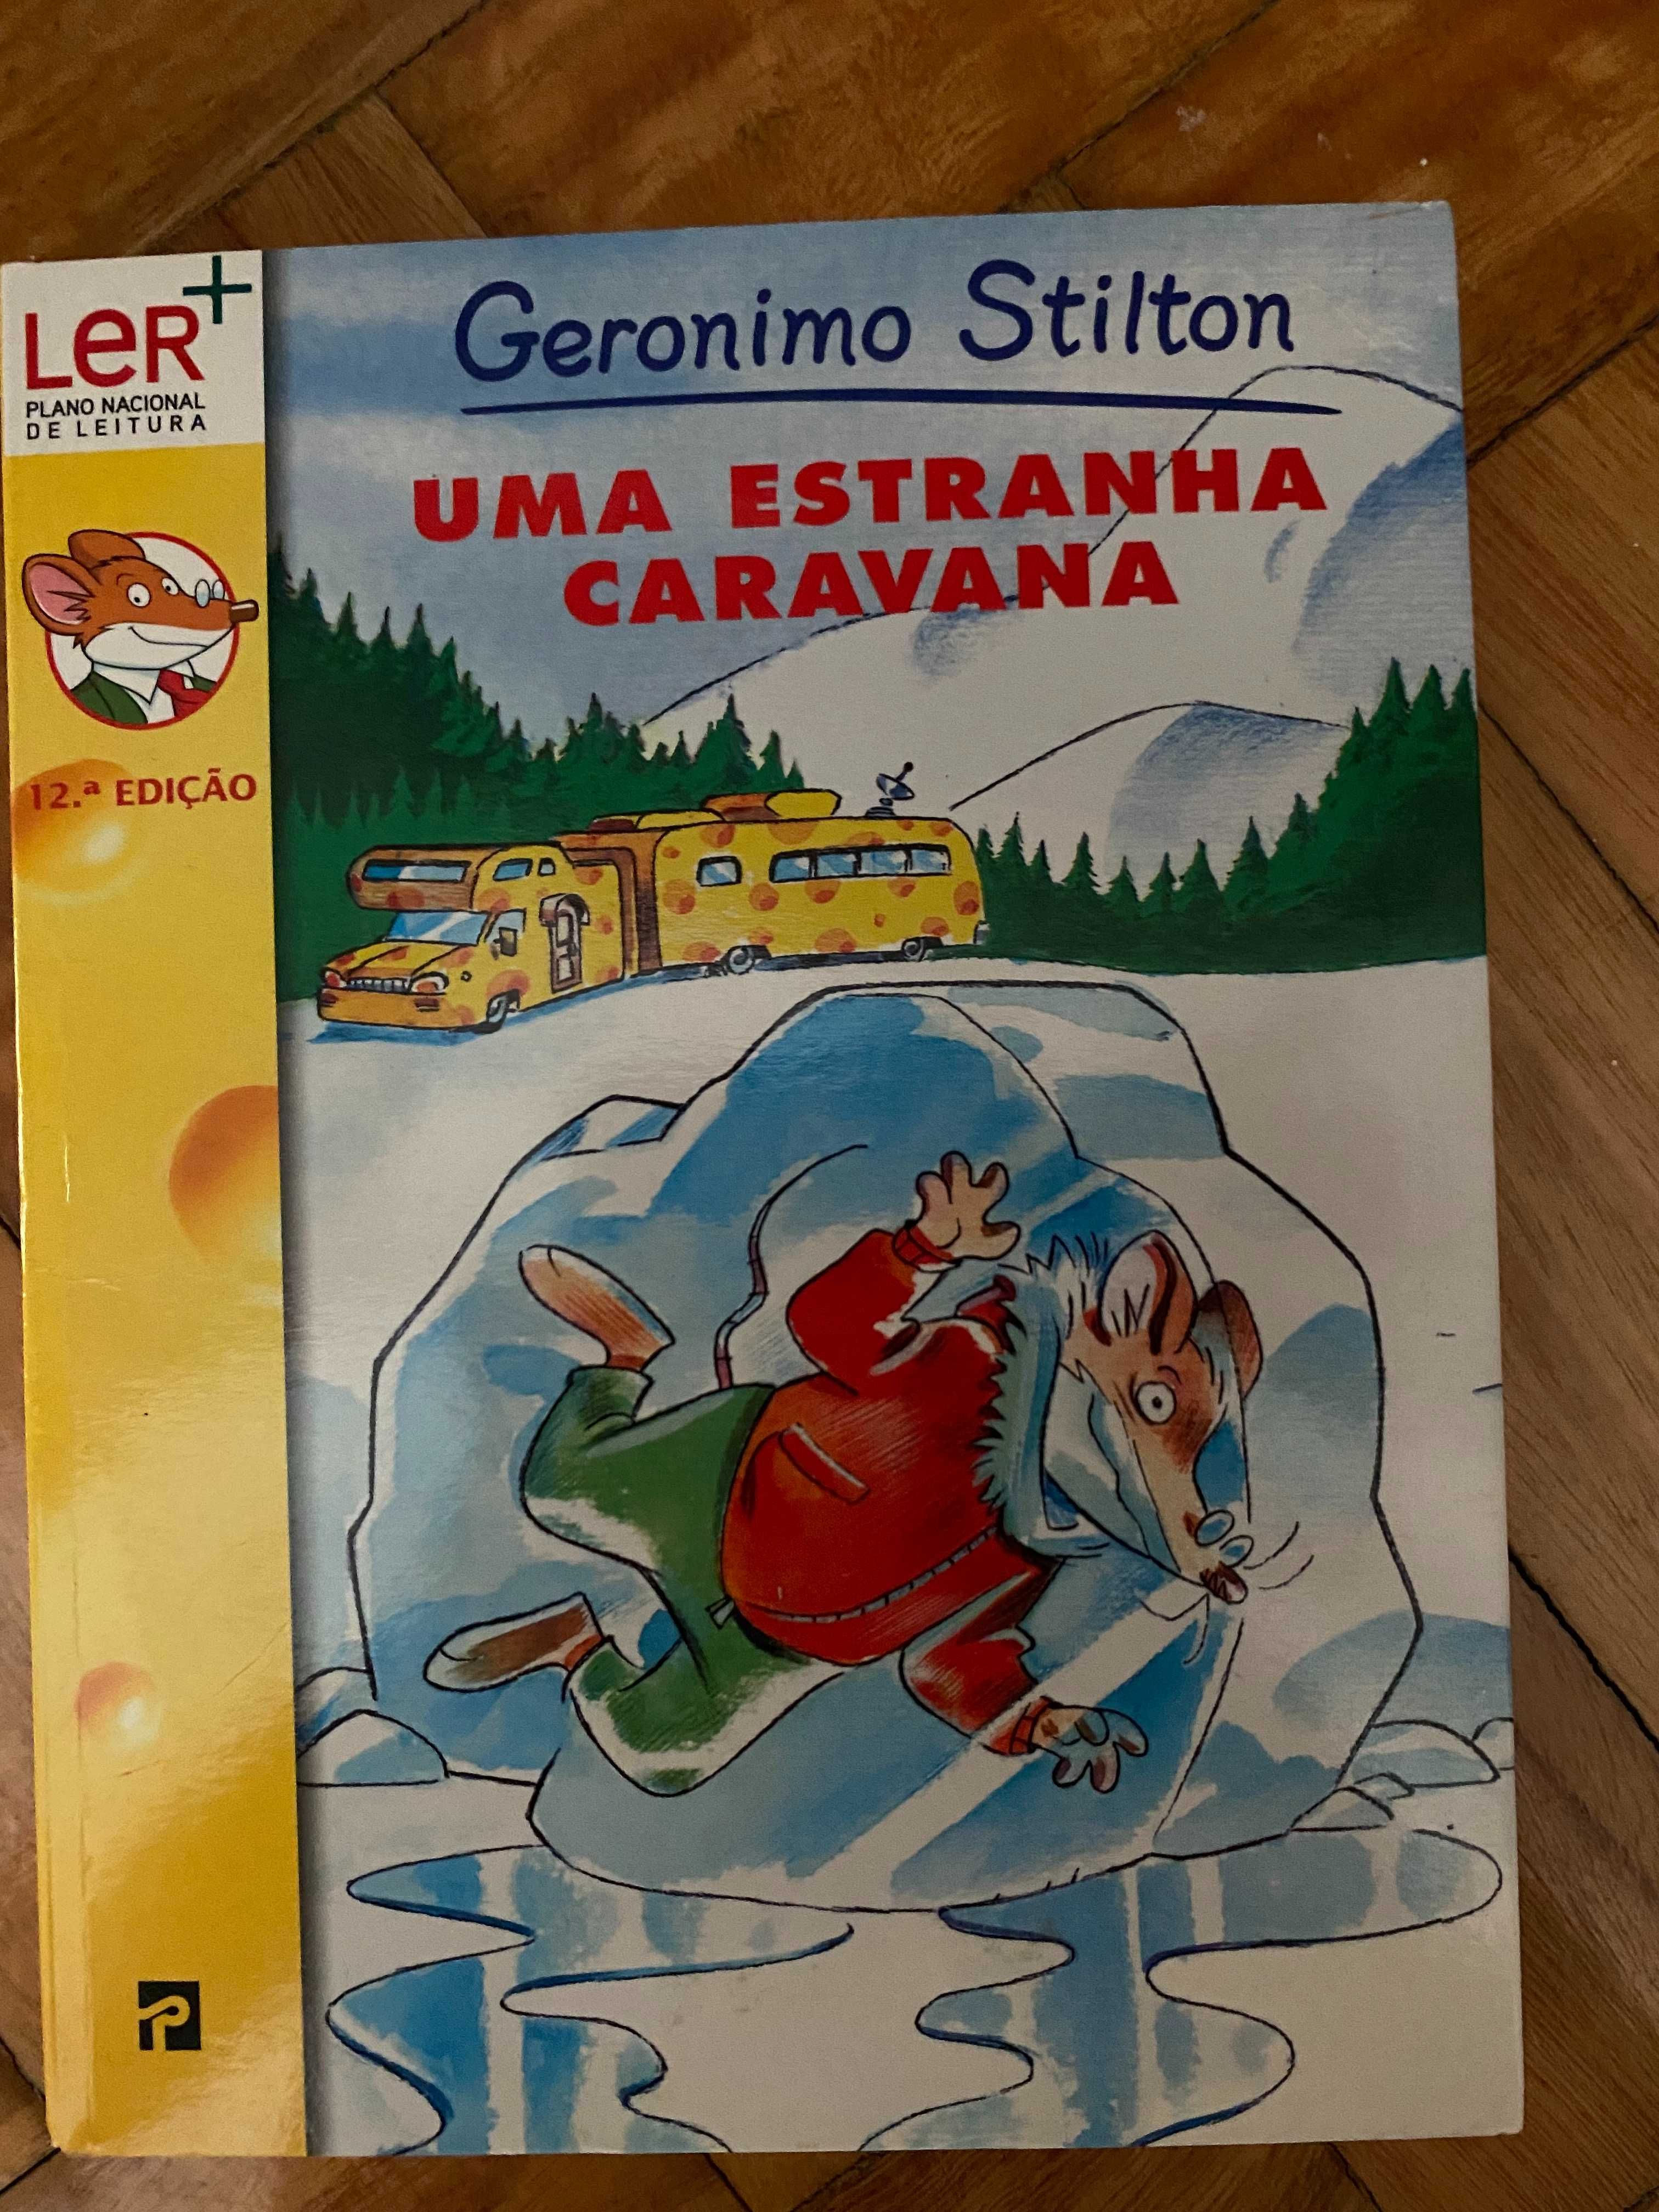 Livro "Geronimo Stilton - Uma Estranha Caravana"